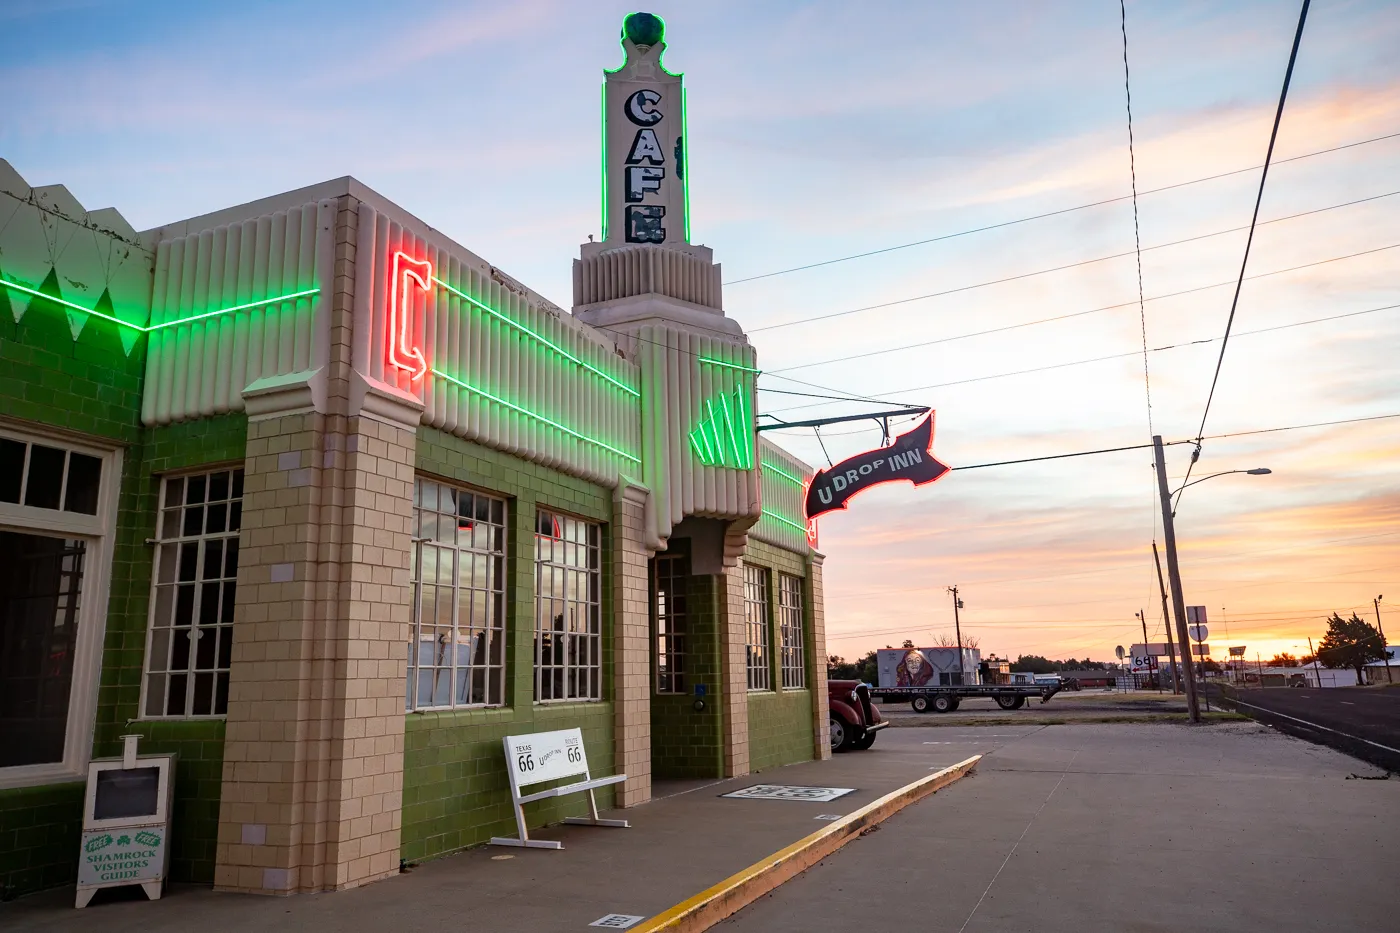 The Conoco Tower Station and U-Drop Inn Café in Shamrock, Texas